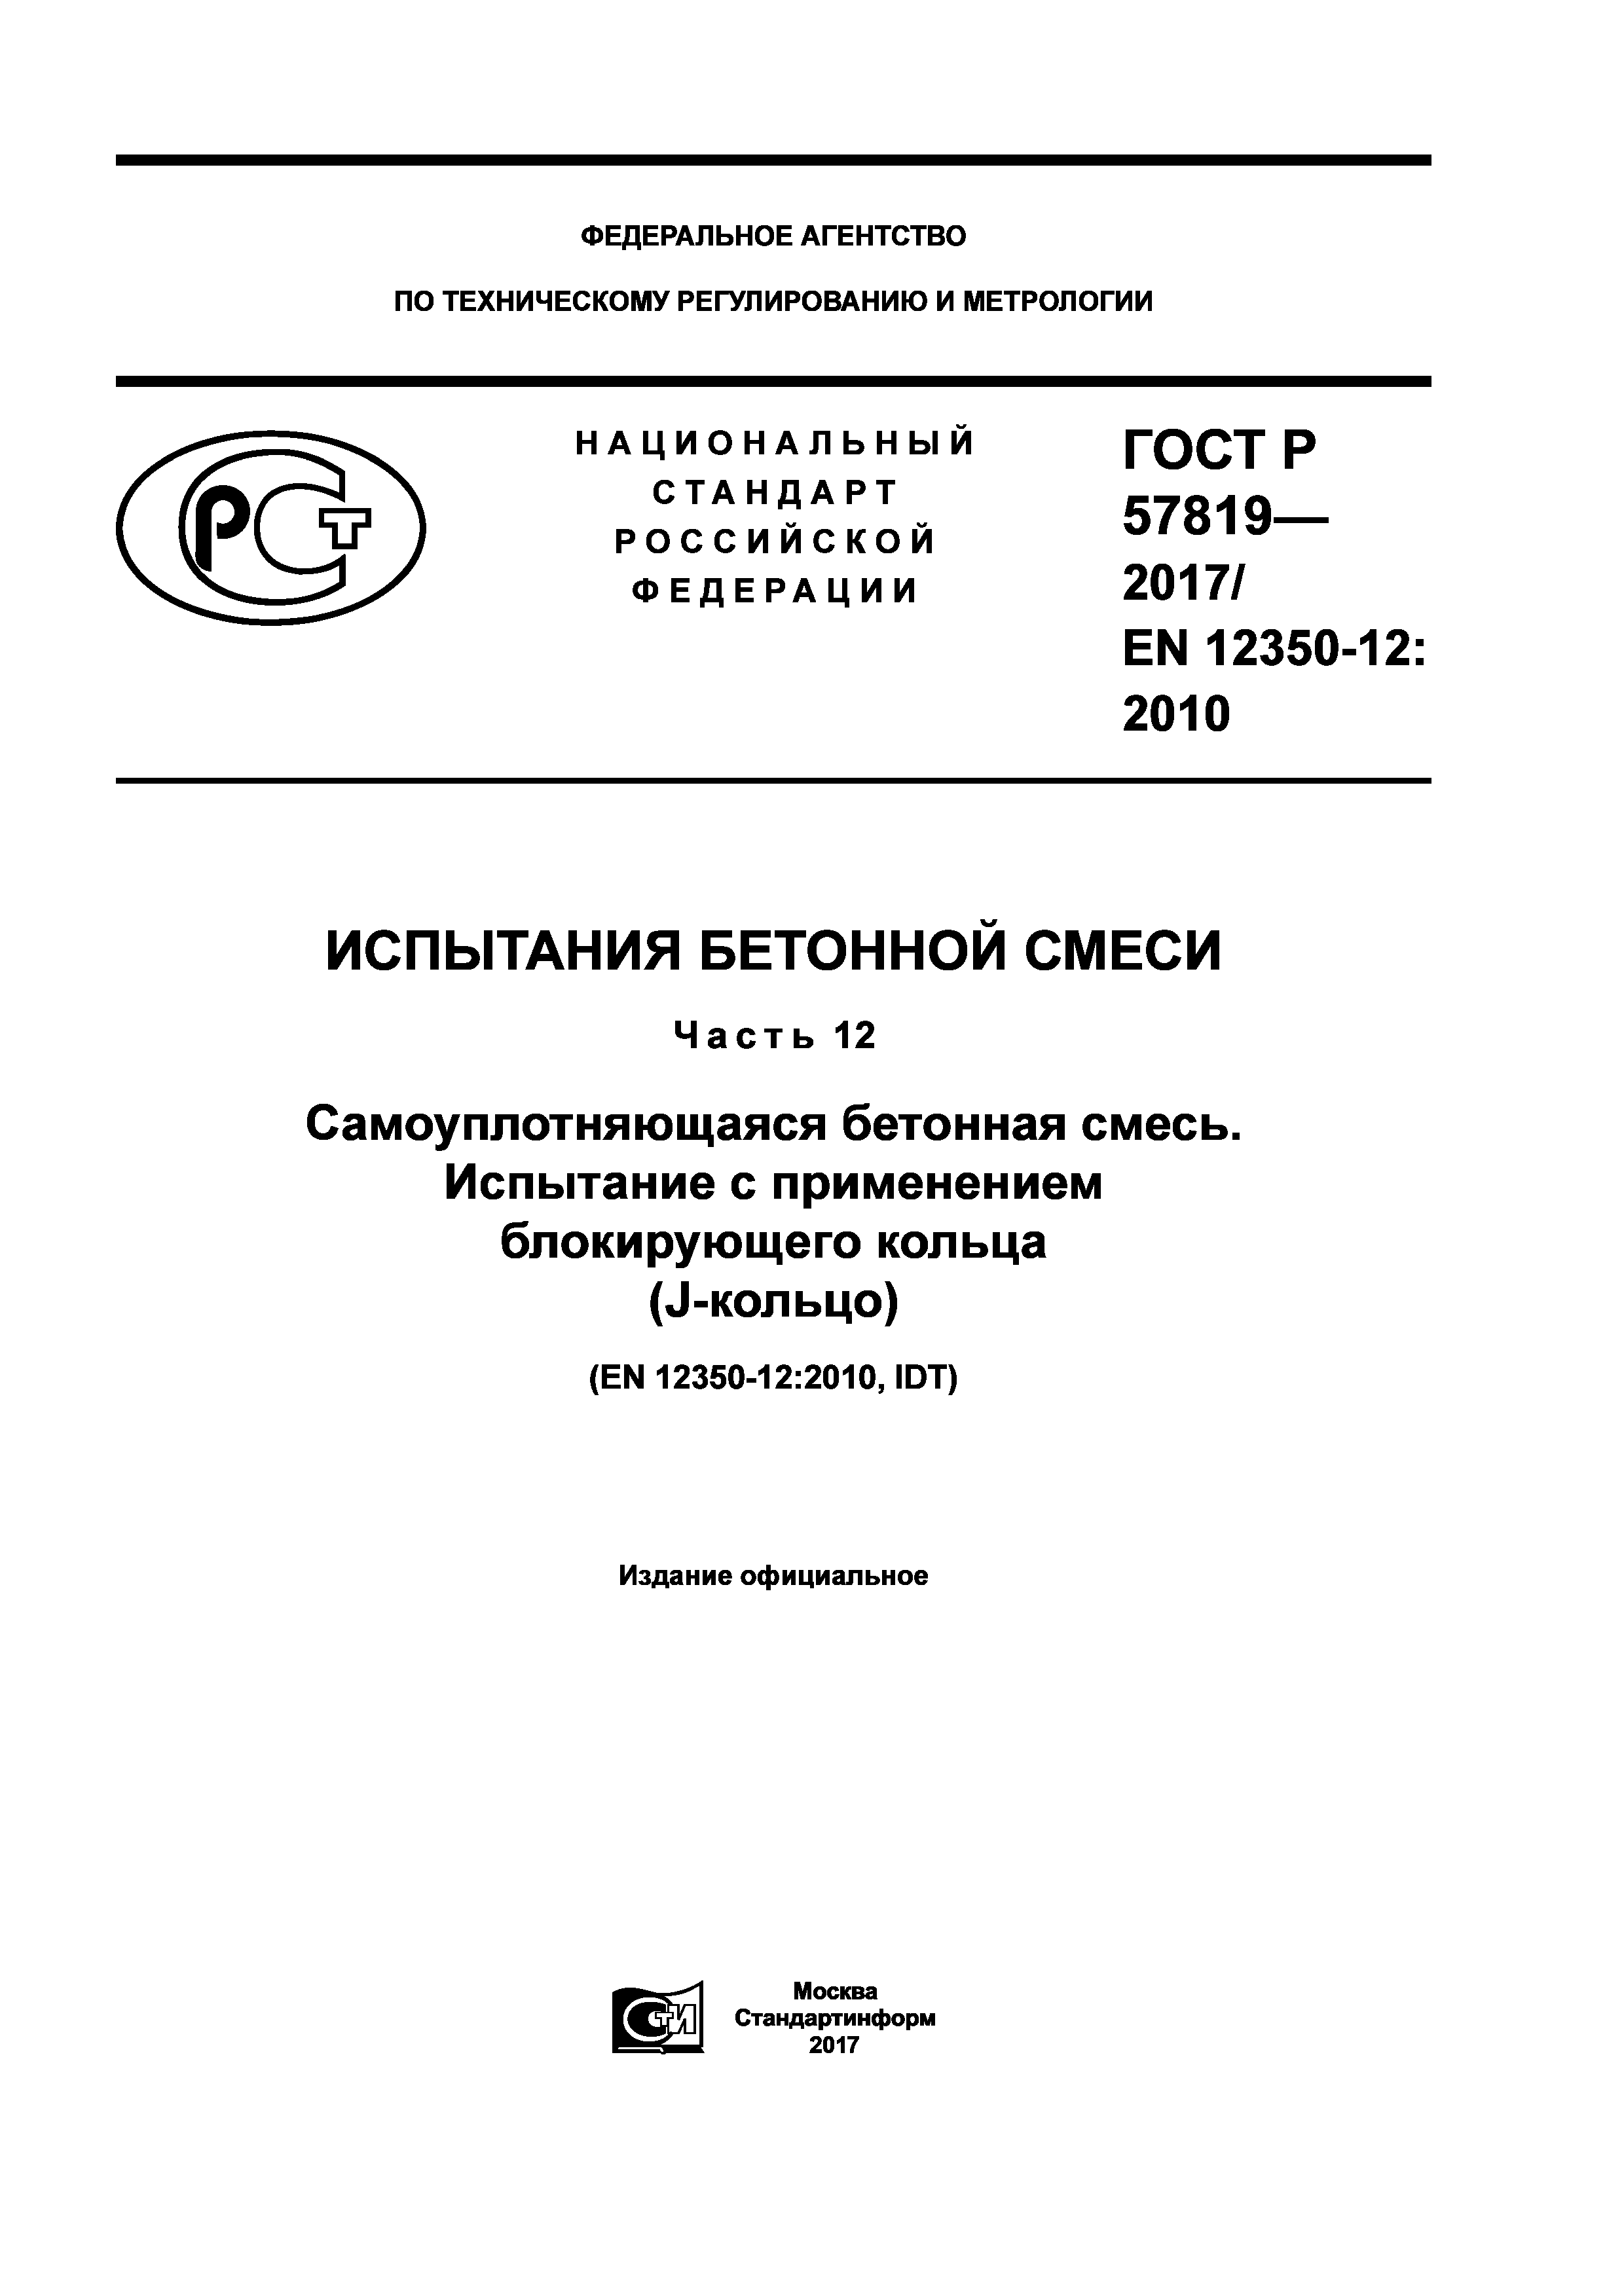 ГОСТ Р 57819-2017